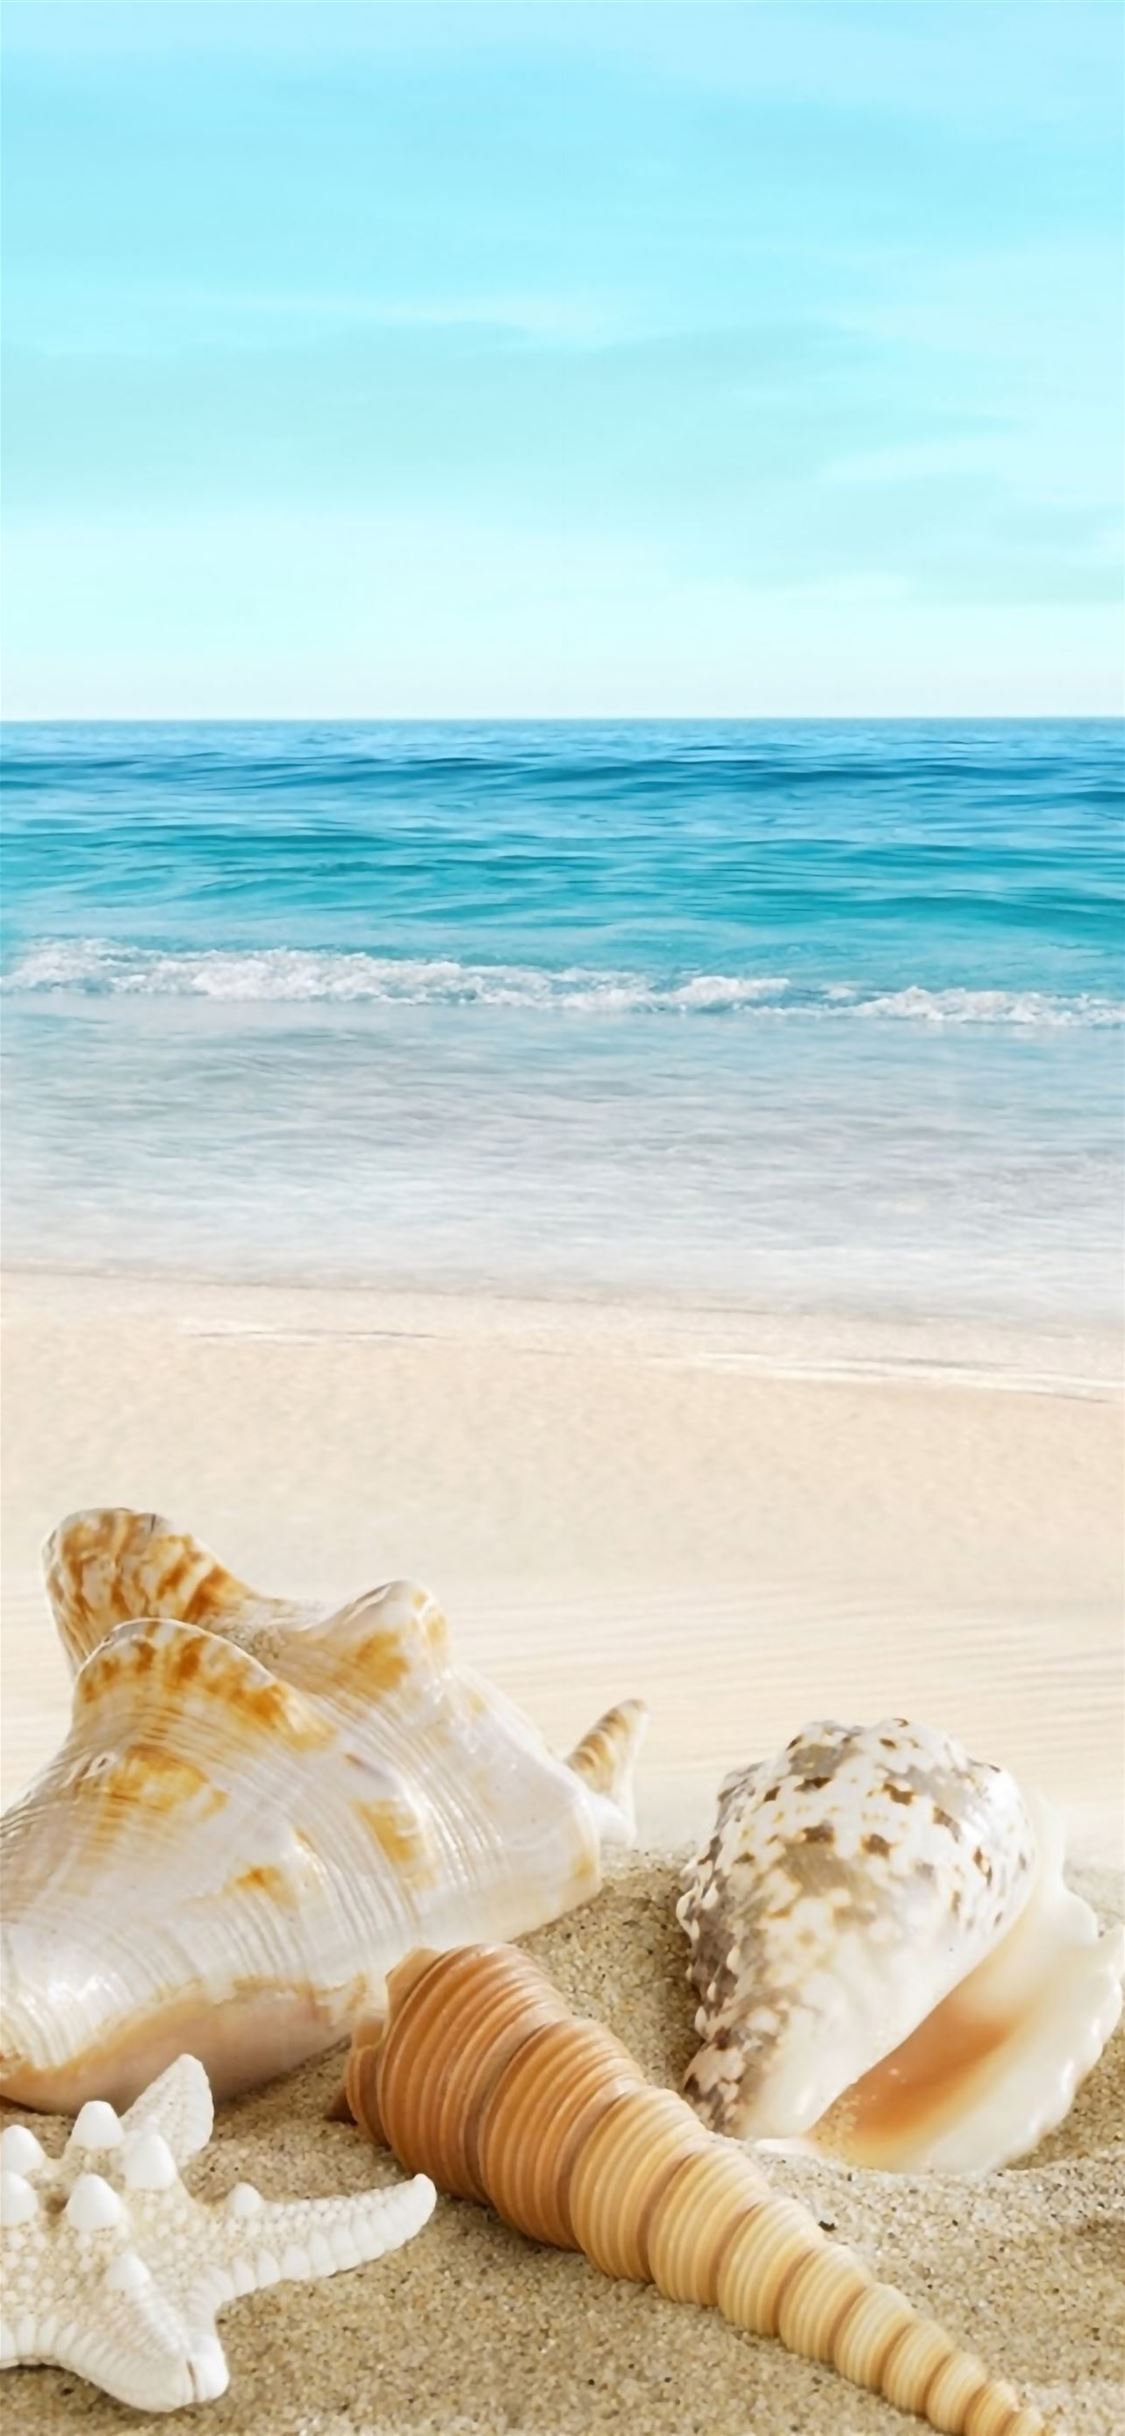 Nature Sunny Ocean Seaside Beach Shells iPhone wallpaper 